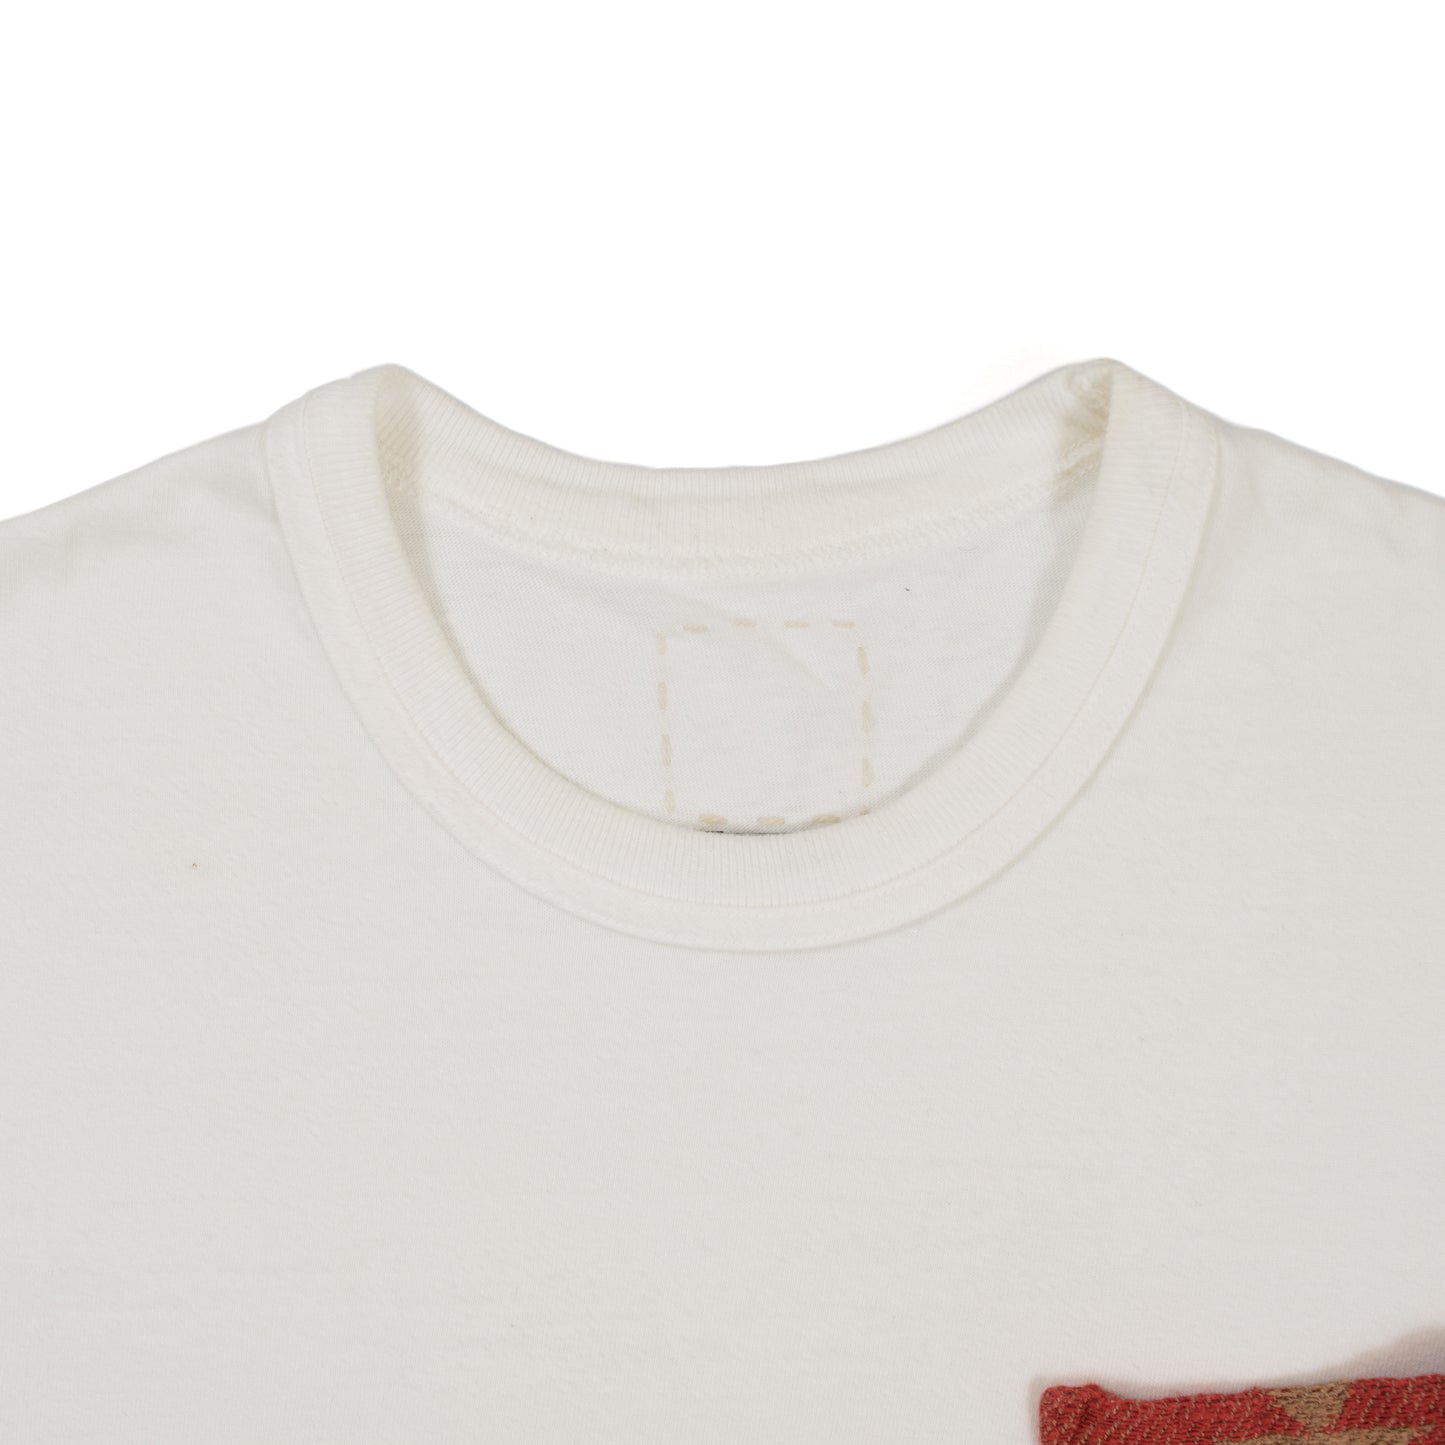 Visvim Patch-Pocket T-Shirt